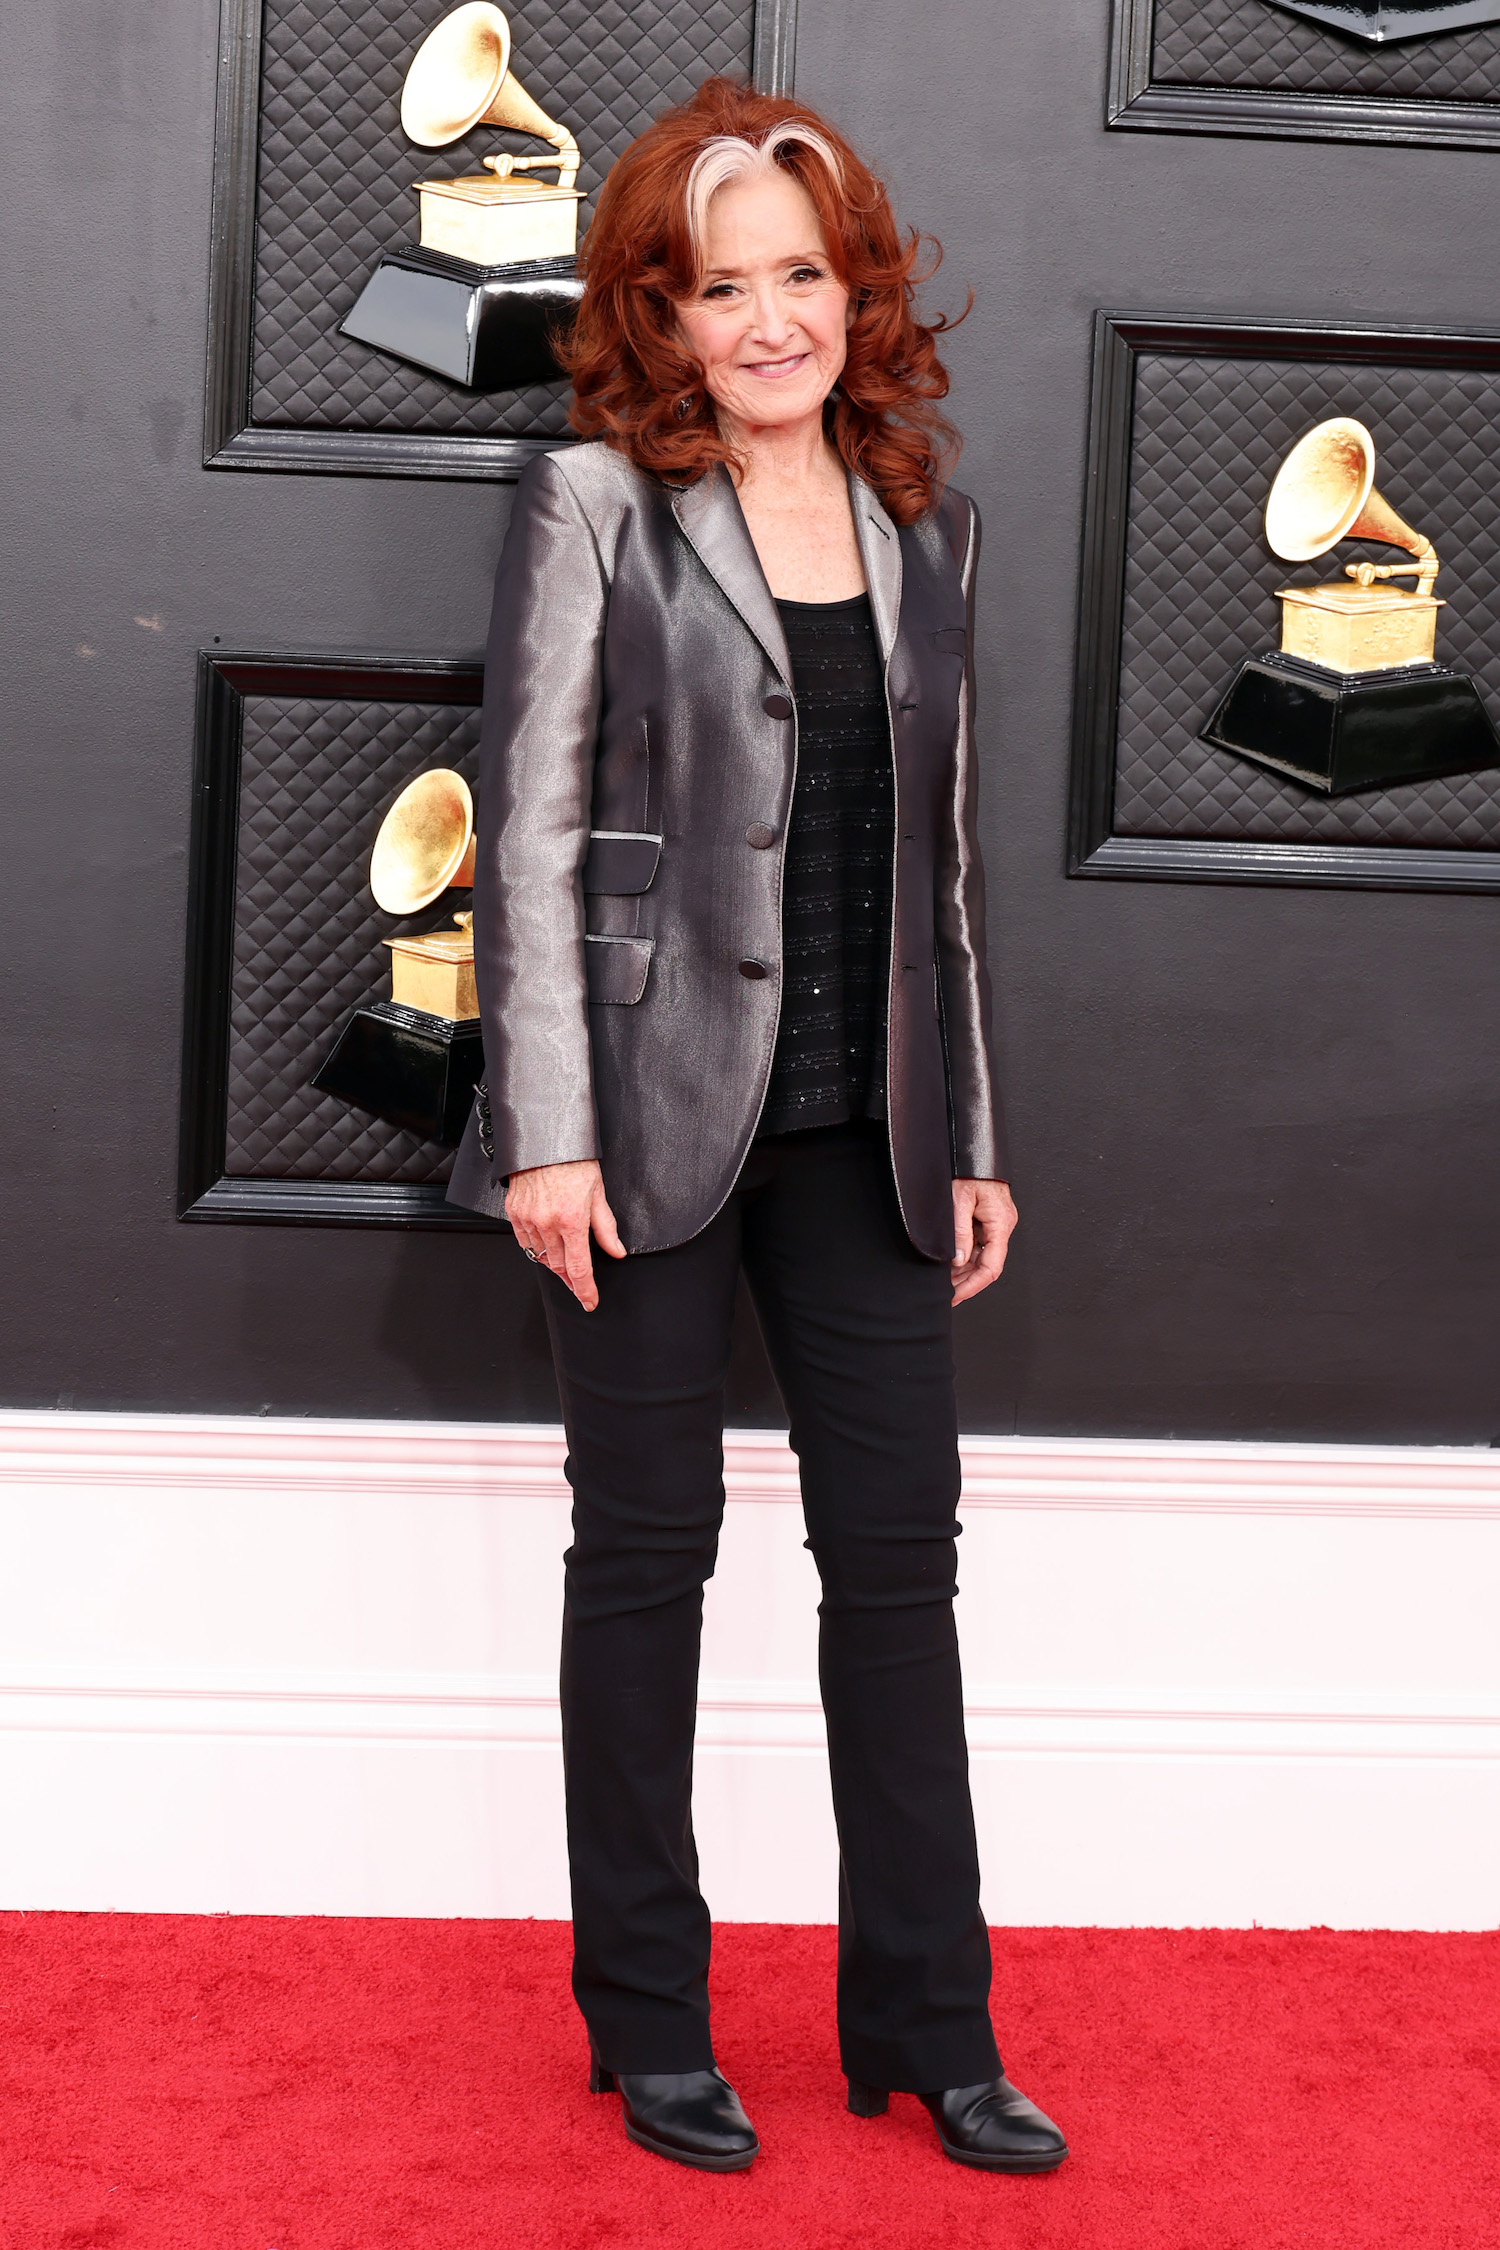 Bonnie Raitt at the Grammys 2022